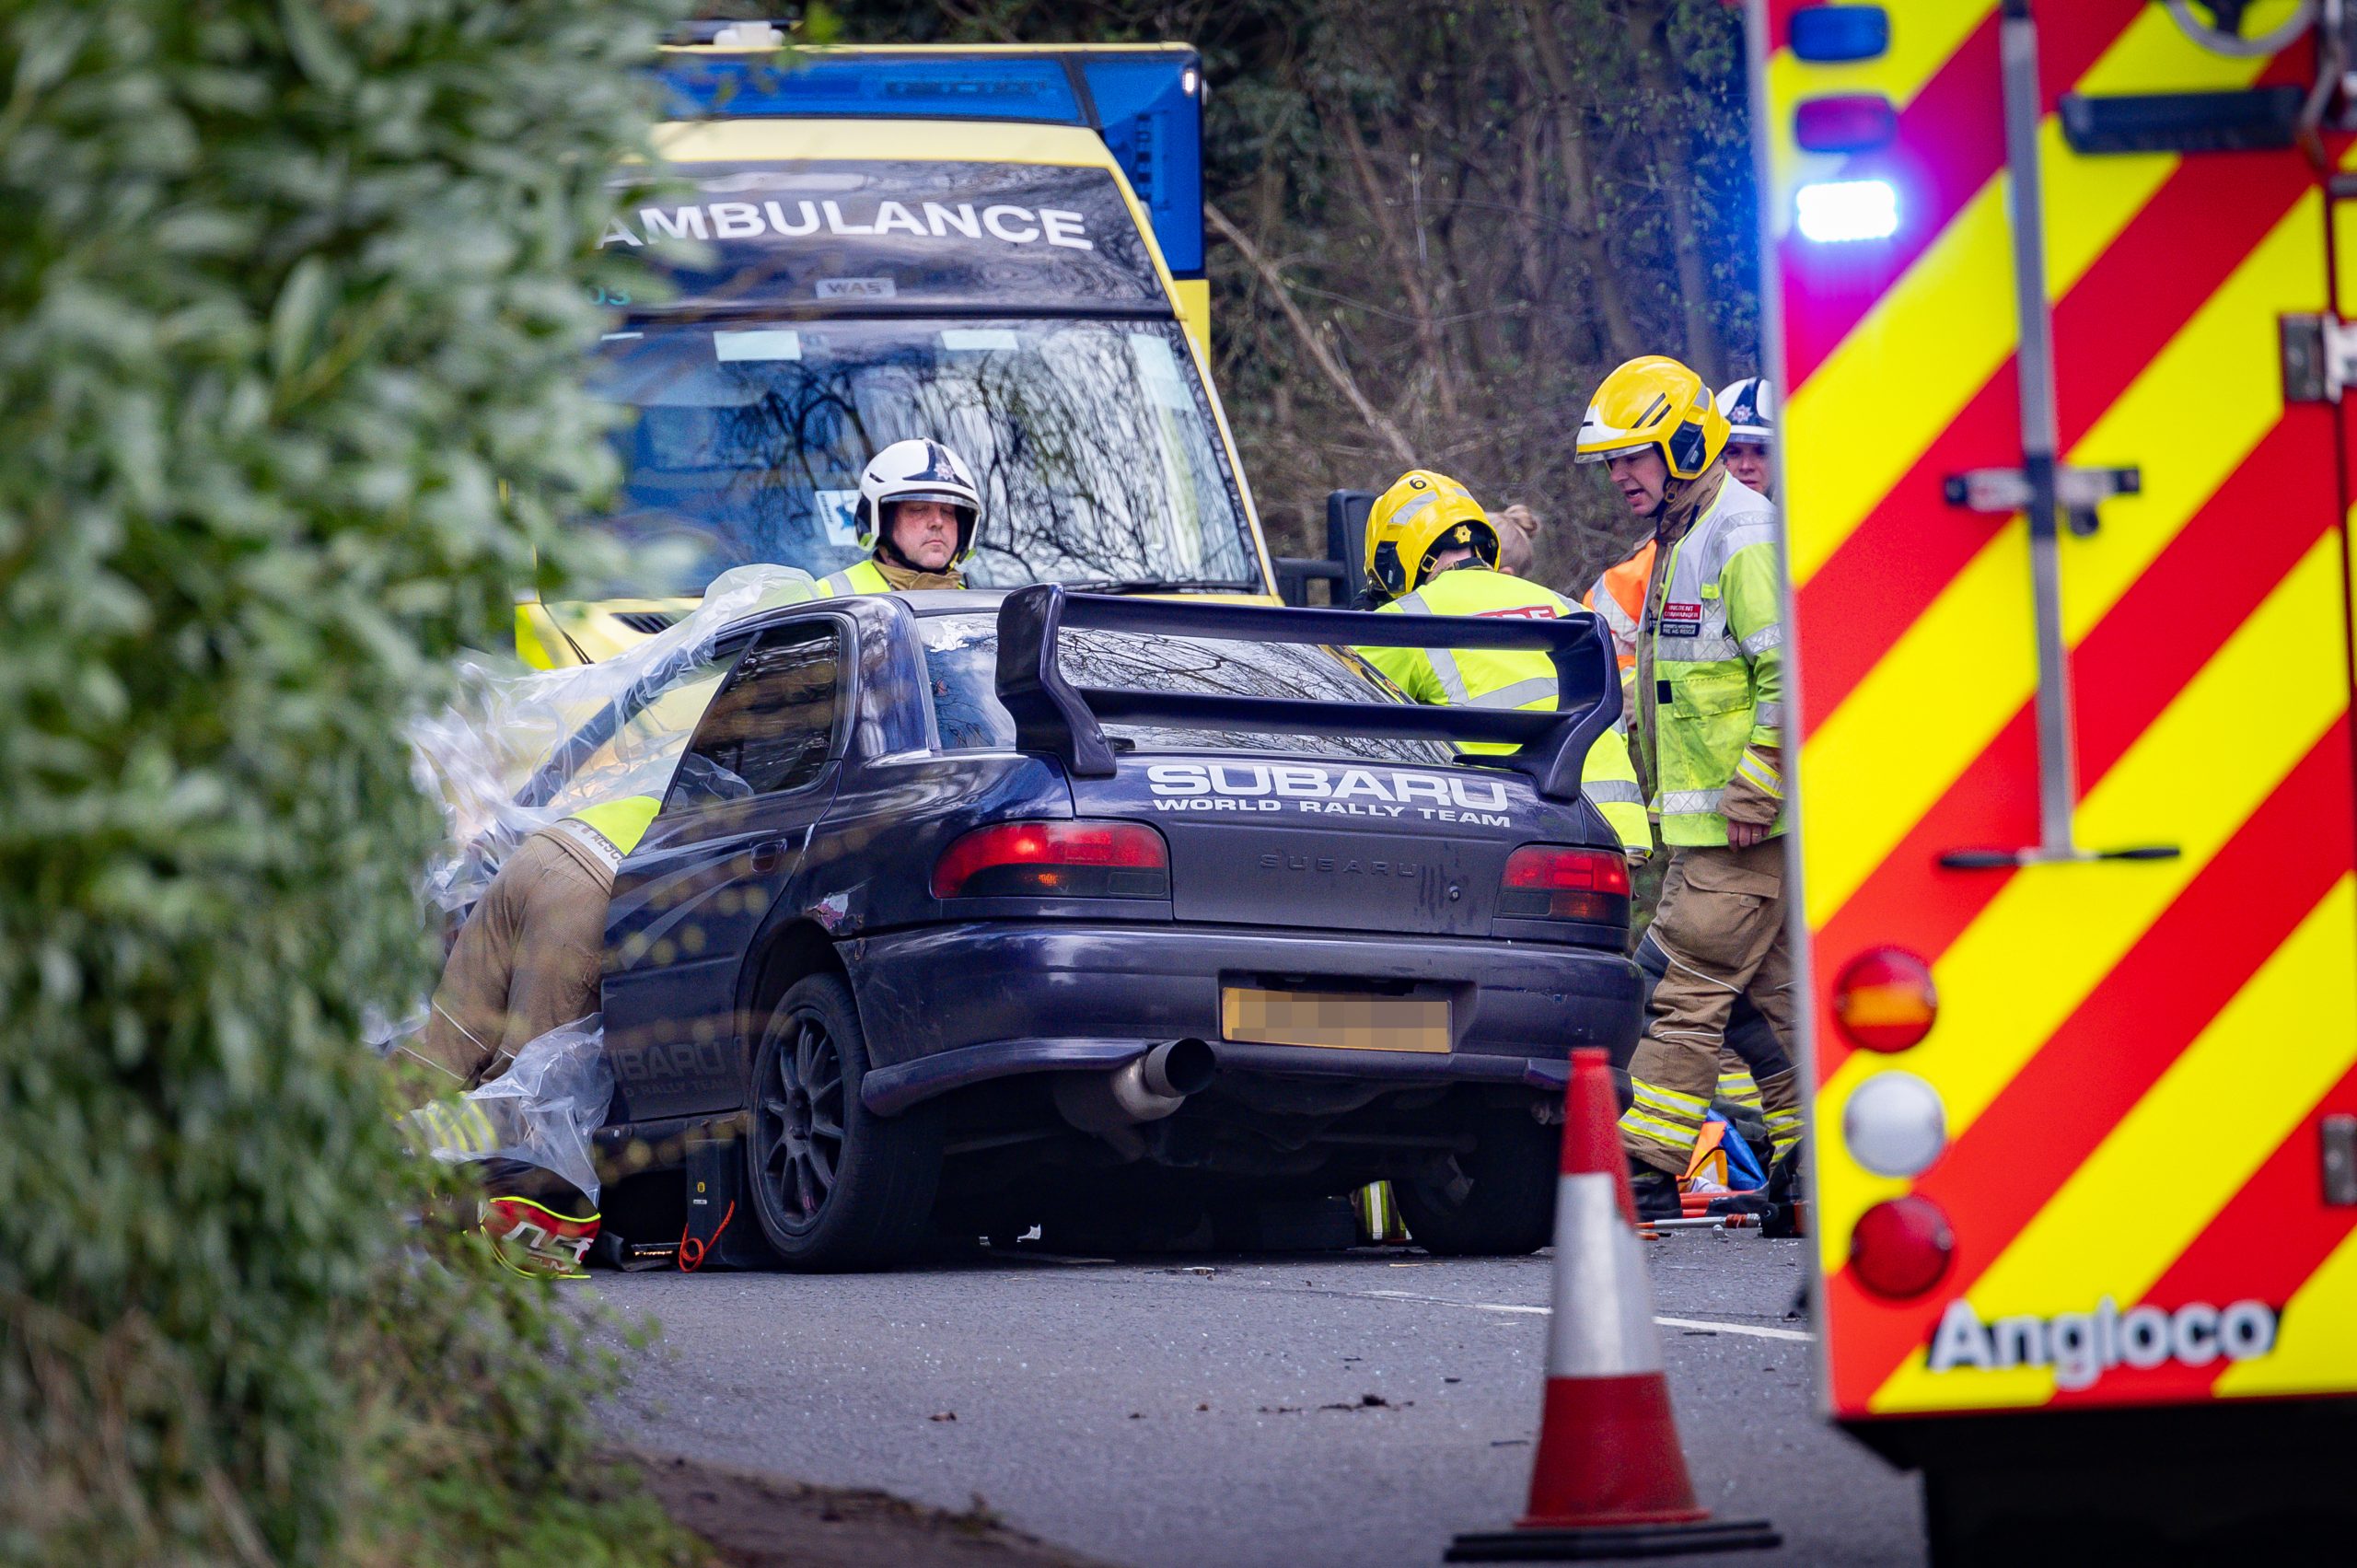 Subaru 'rally car' in A342 crash as air ambulance scrambled 